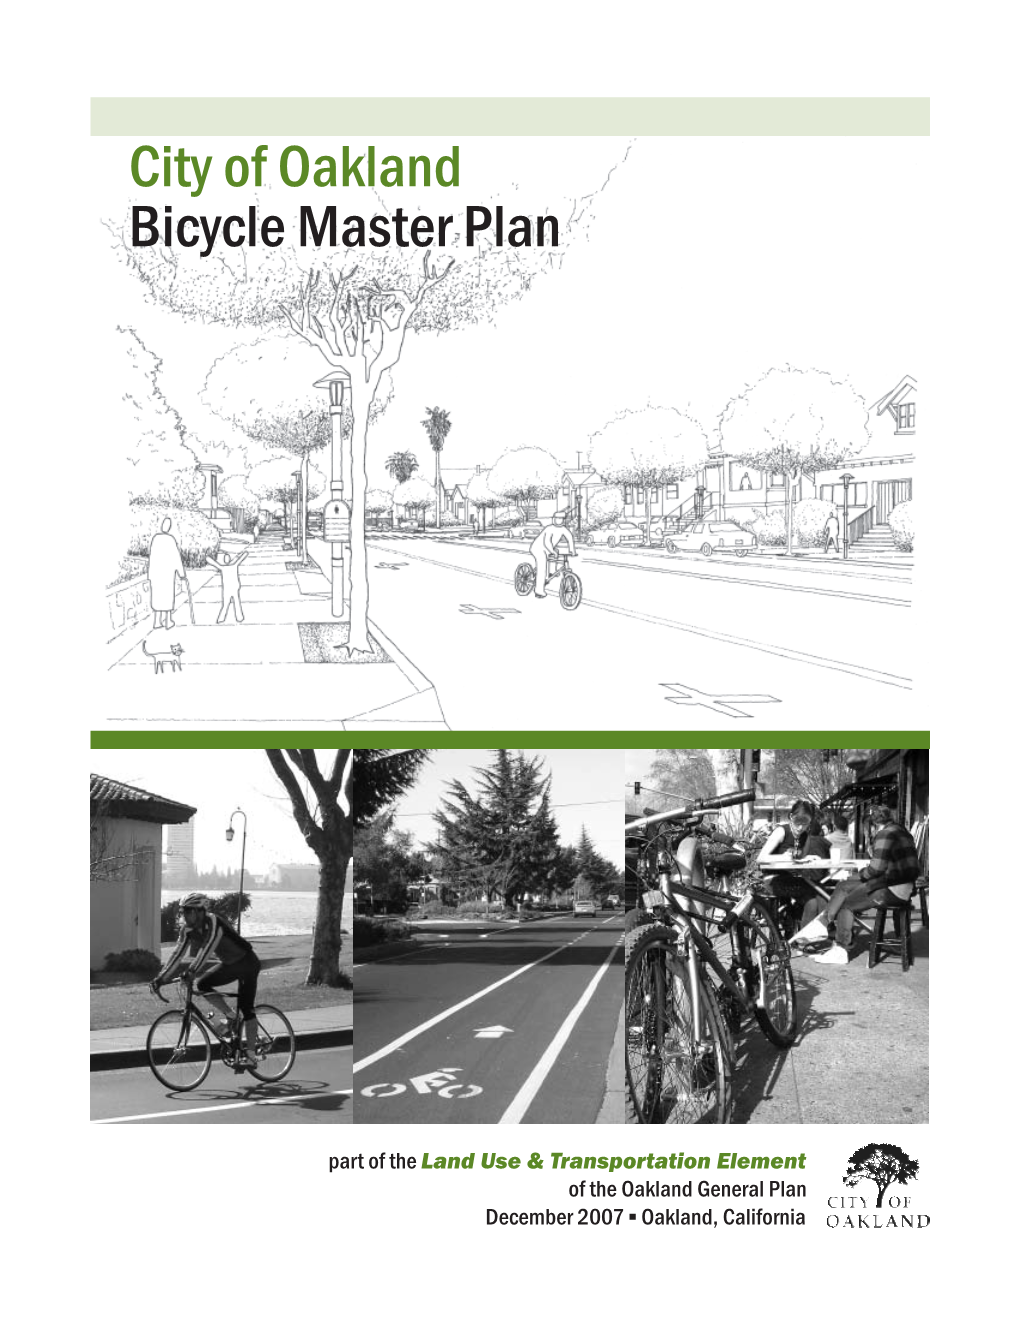 Bicycle Master Plan Policies